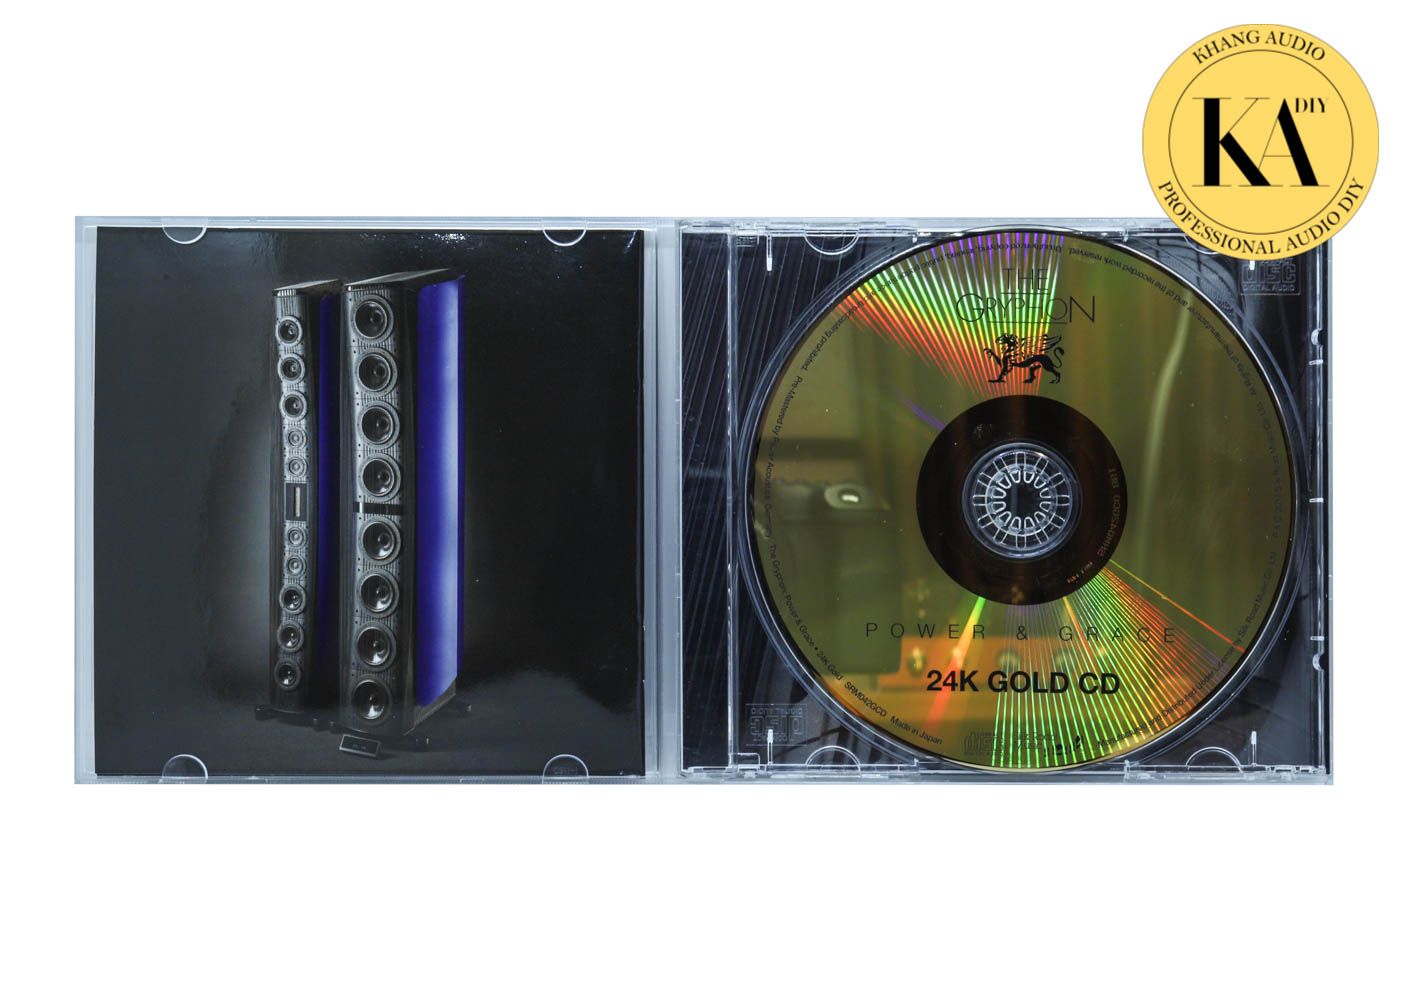 The Gryphon - Power & Grace 1 CD29